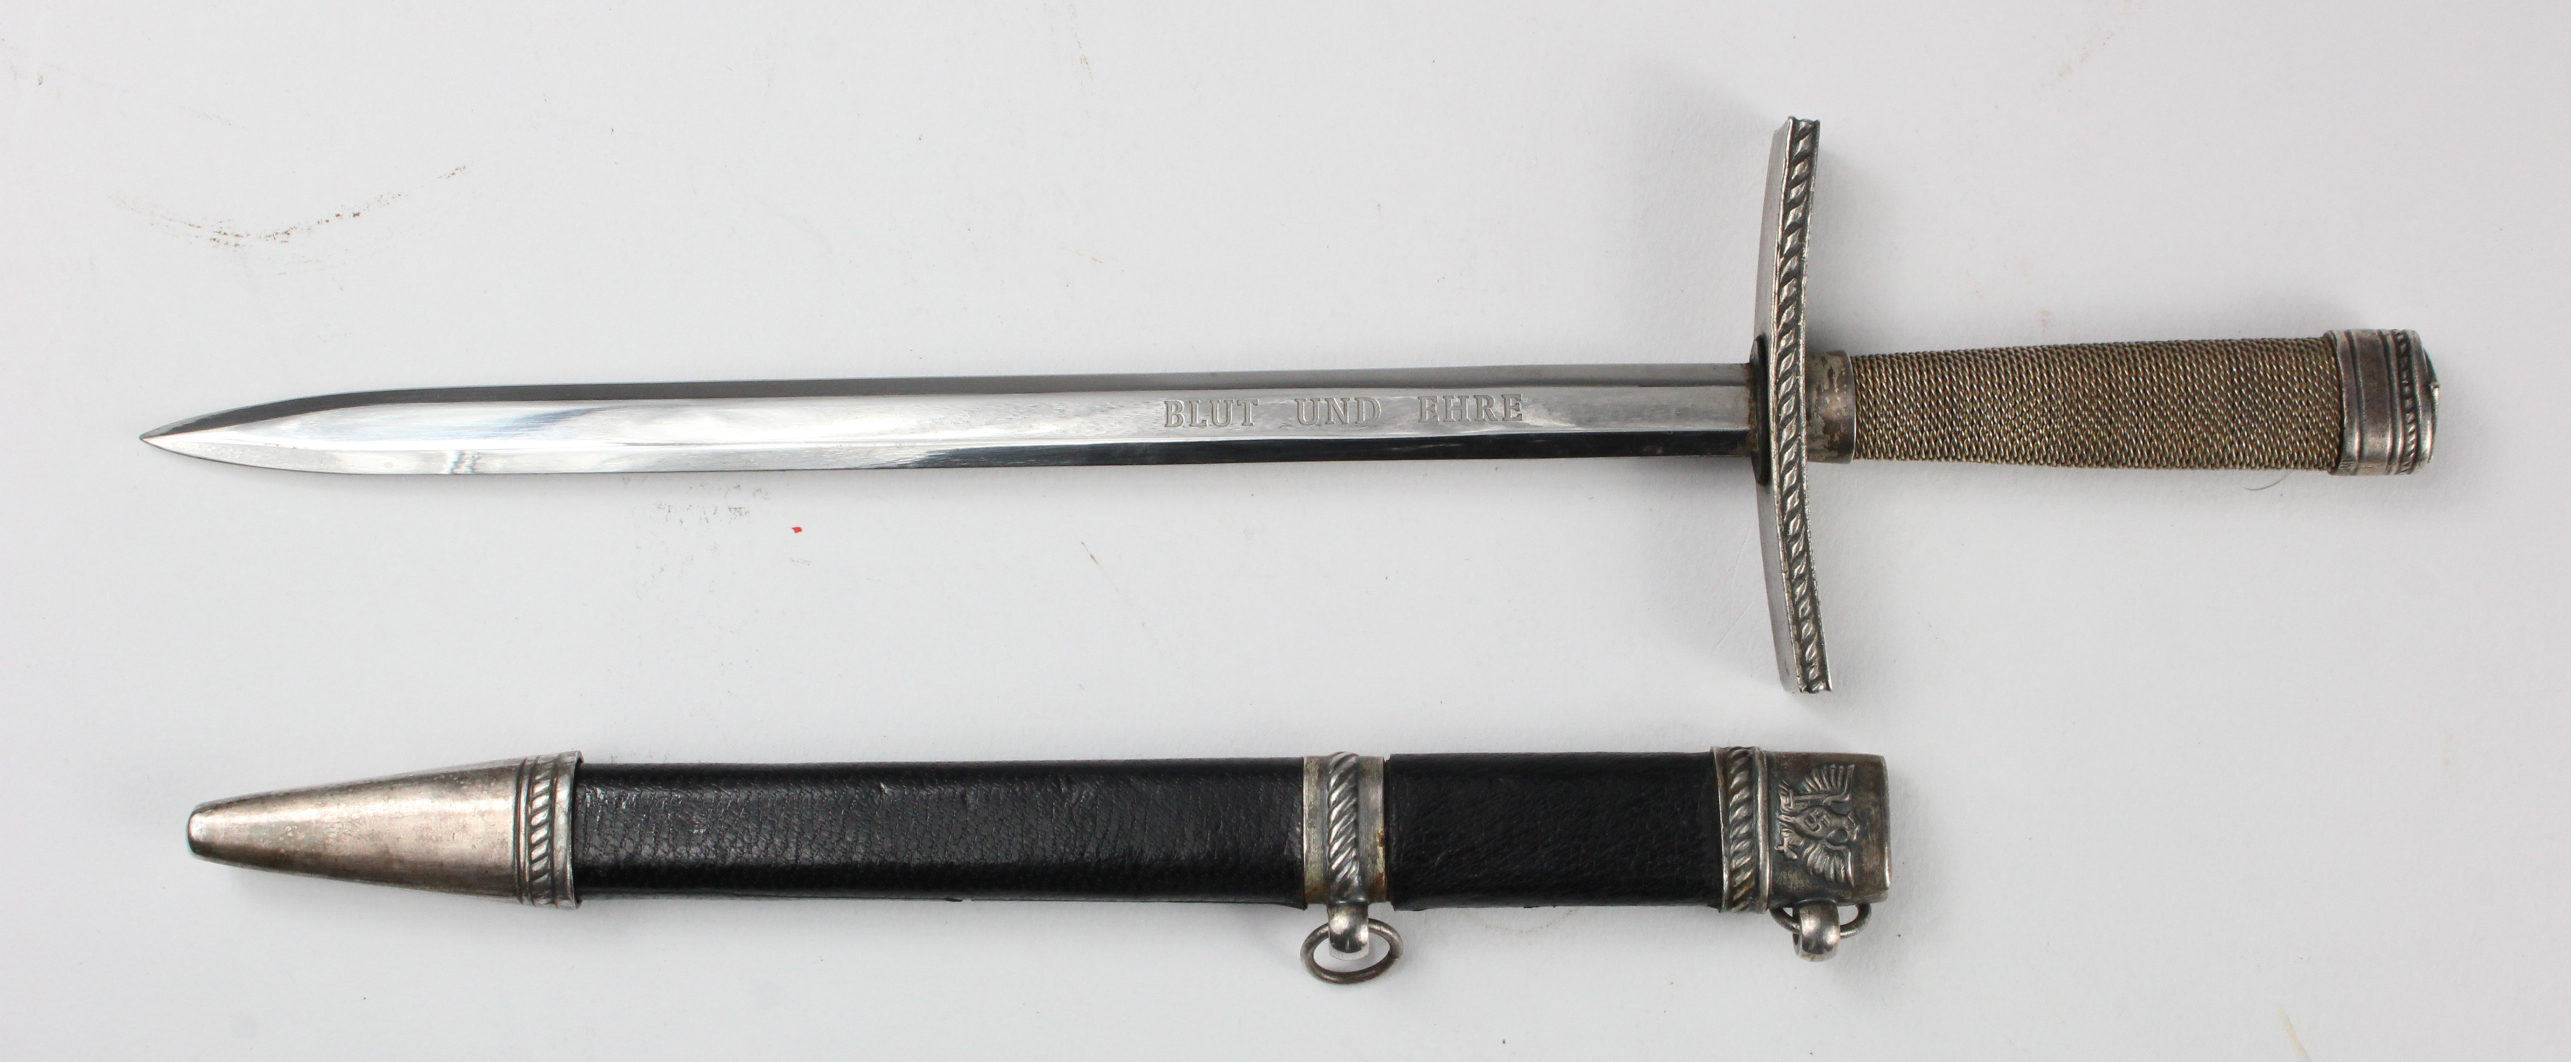 German Leaders dagger paperknife a reduced size dagger, blade etched "Blut und Ehre".